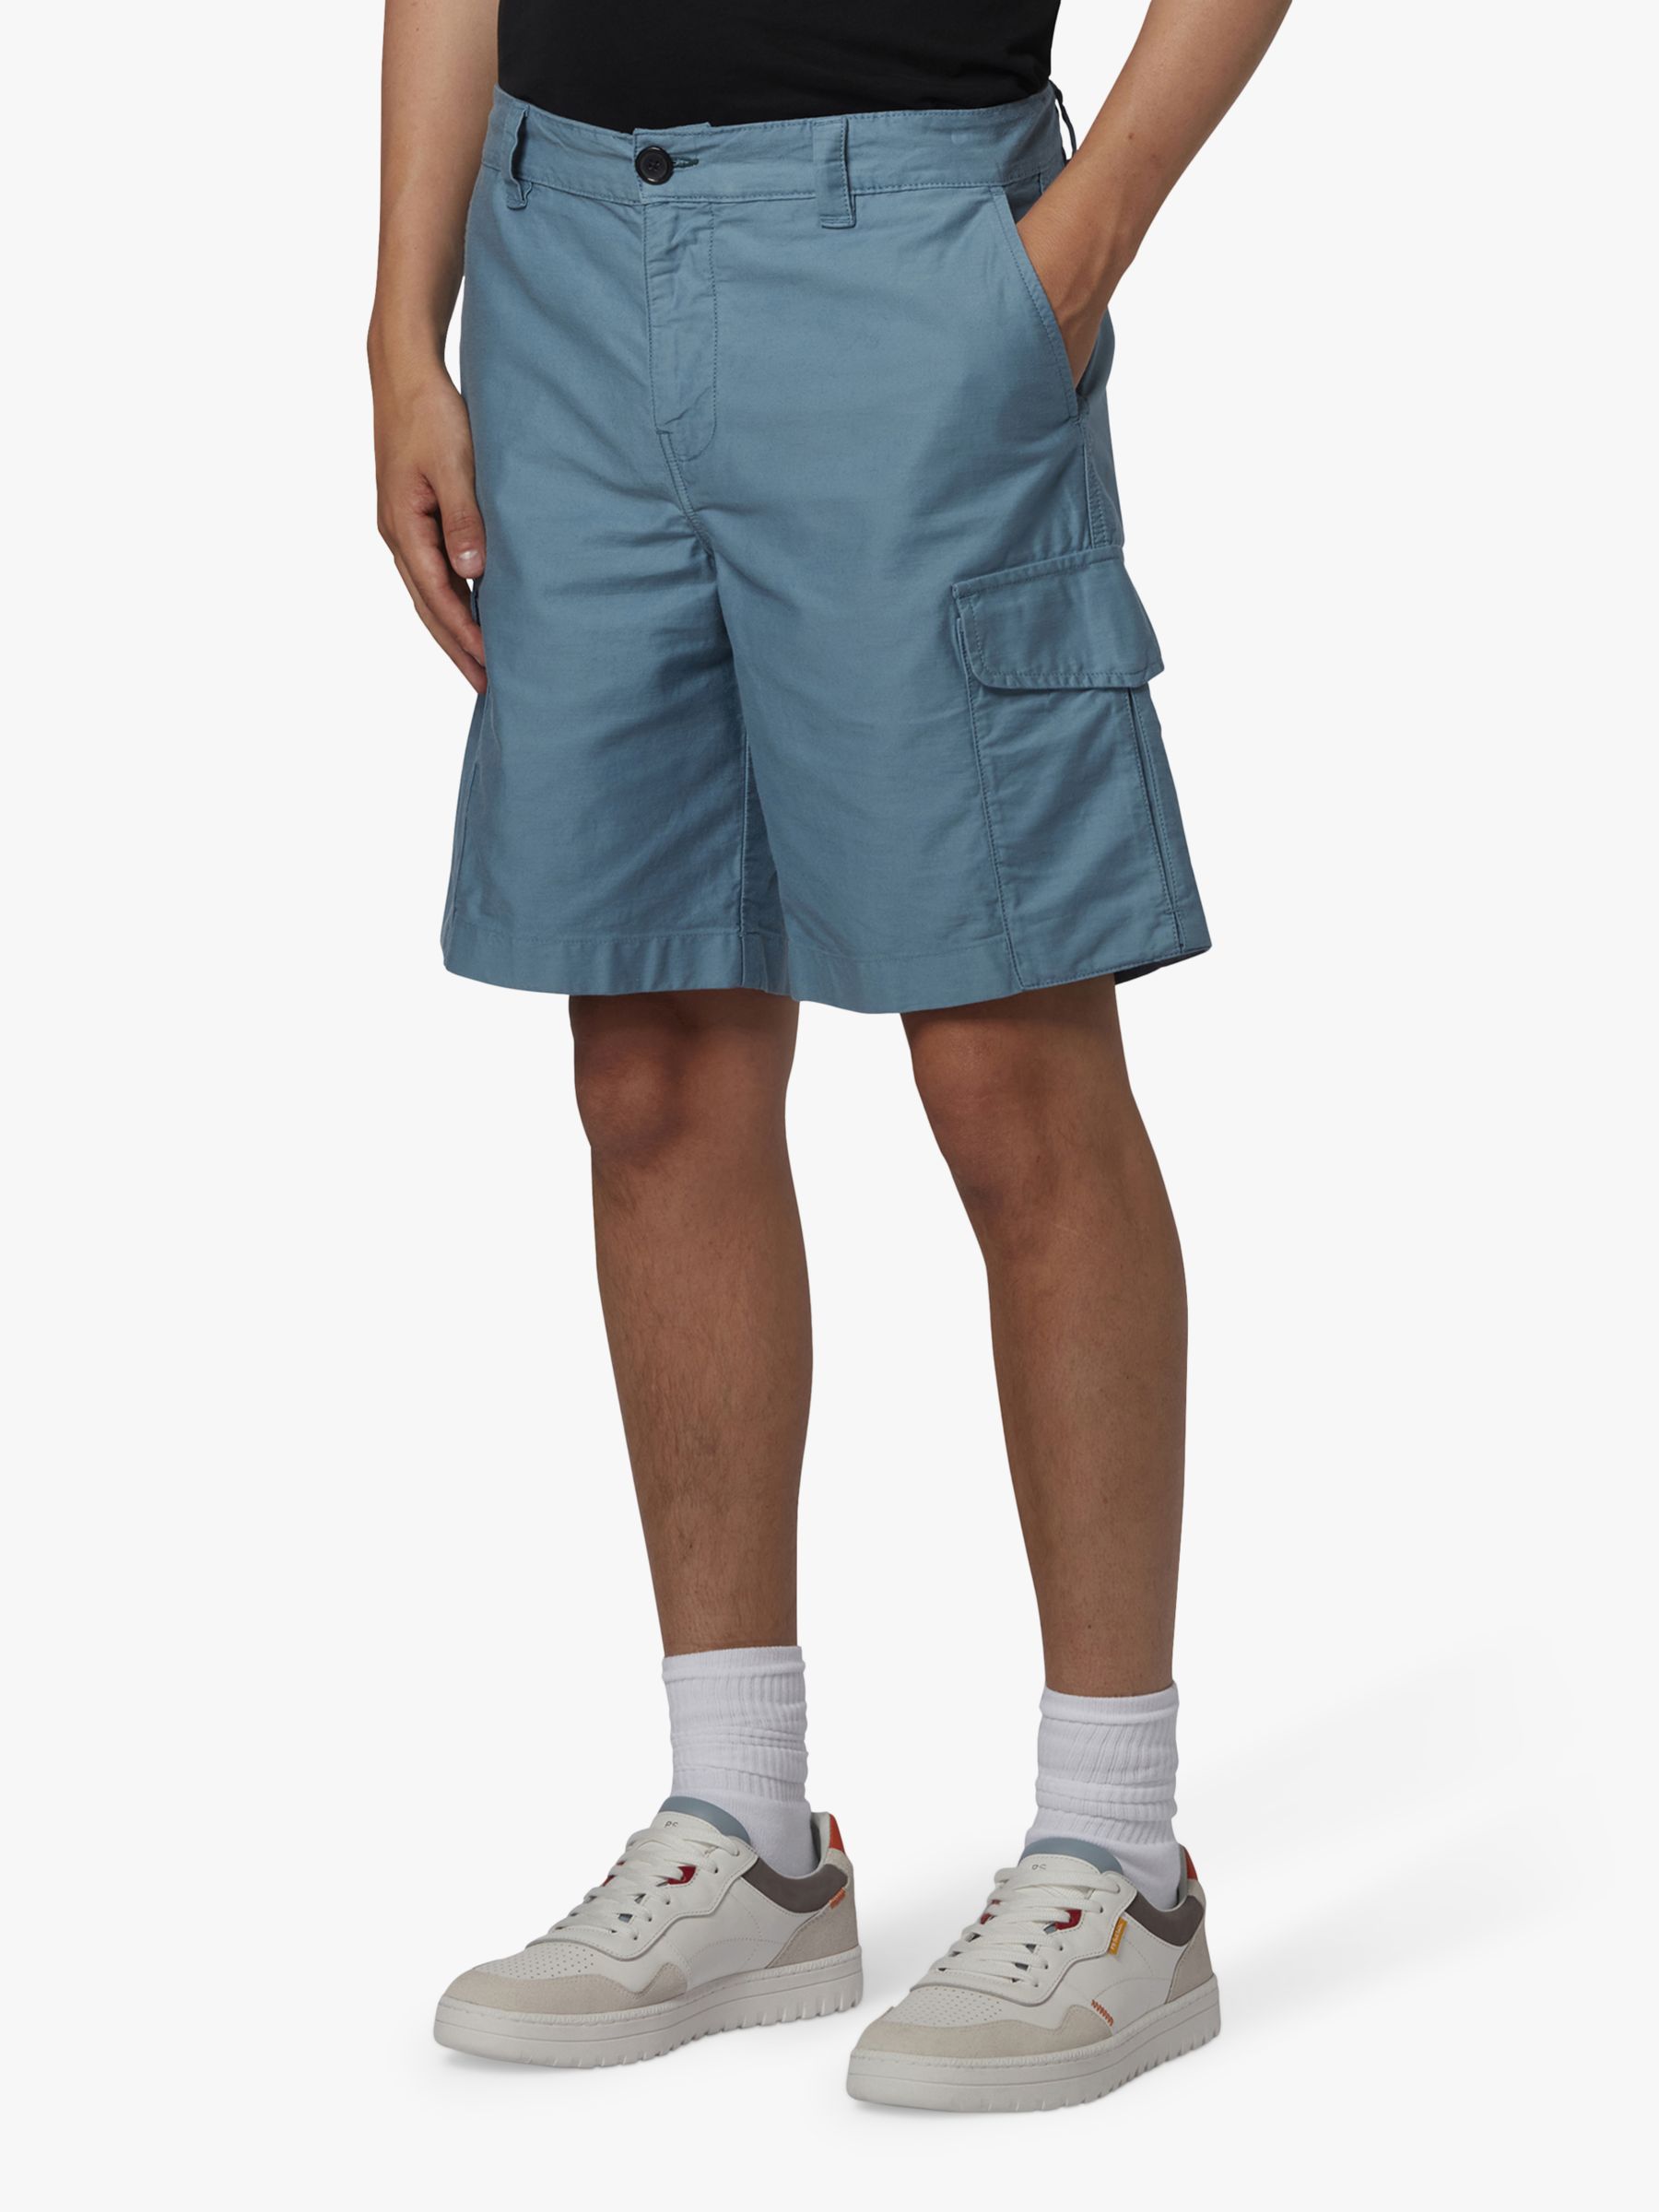 PS Paul Smith Cargo Shorts, Blue, 30R